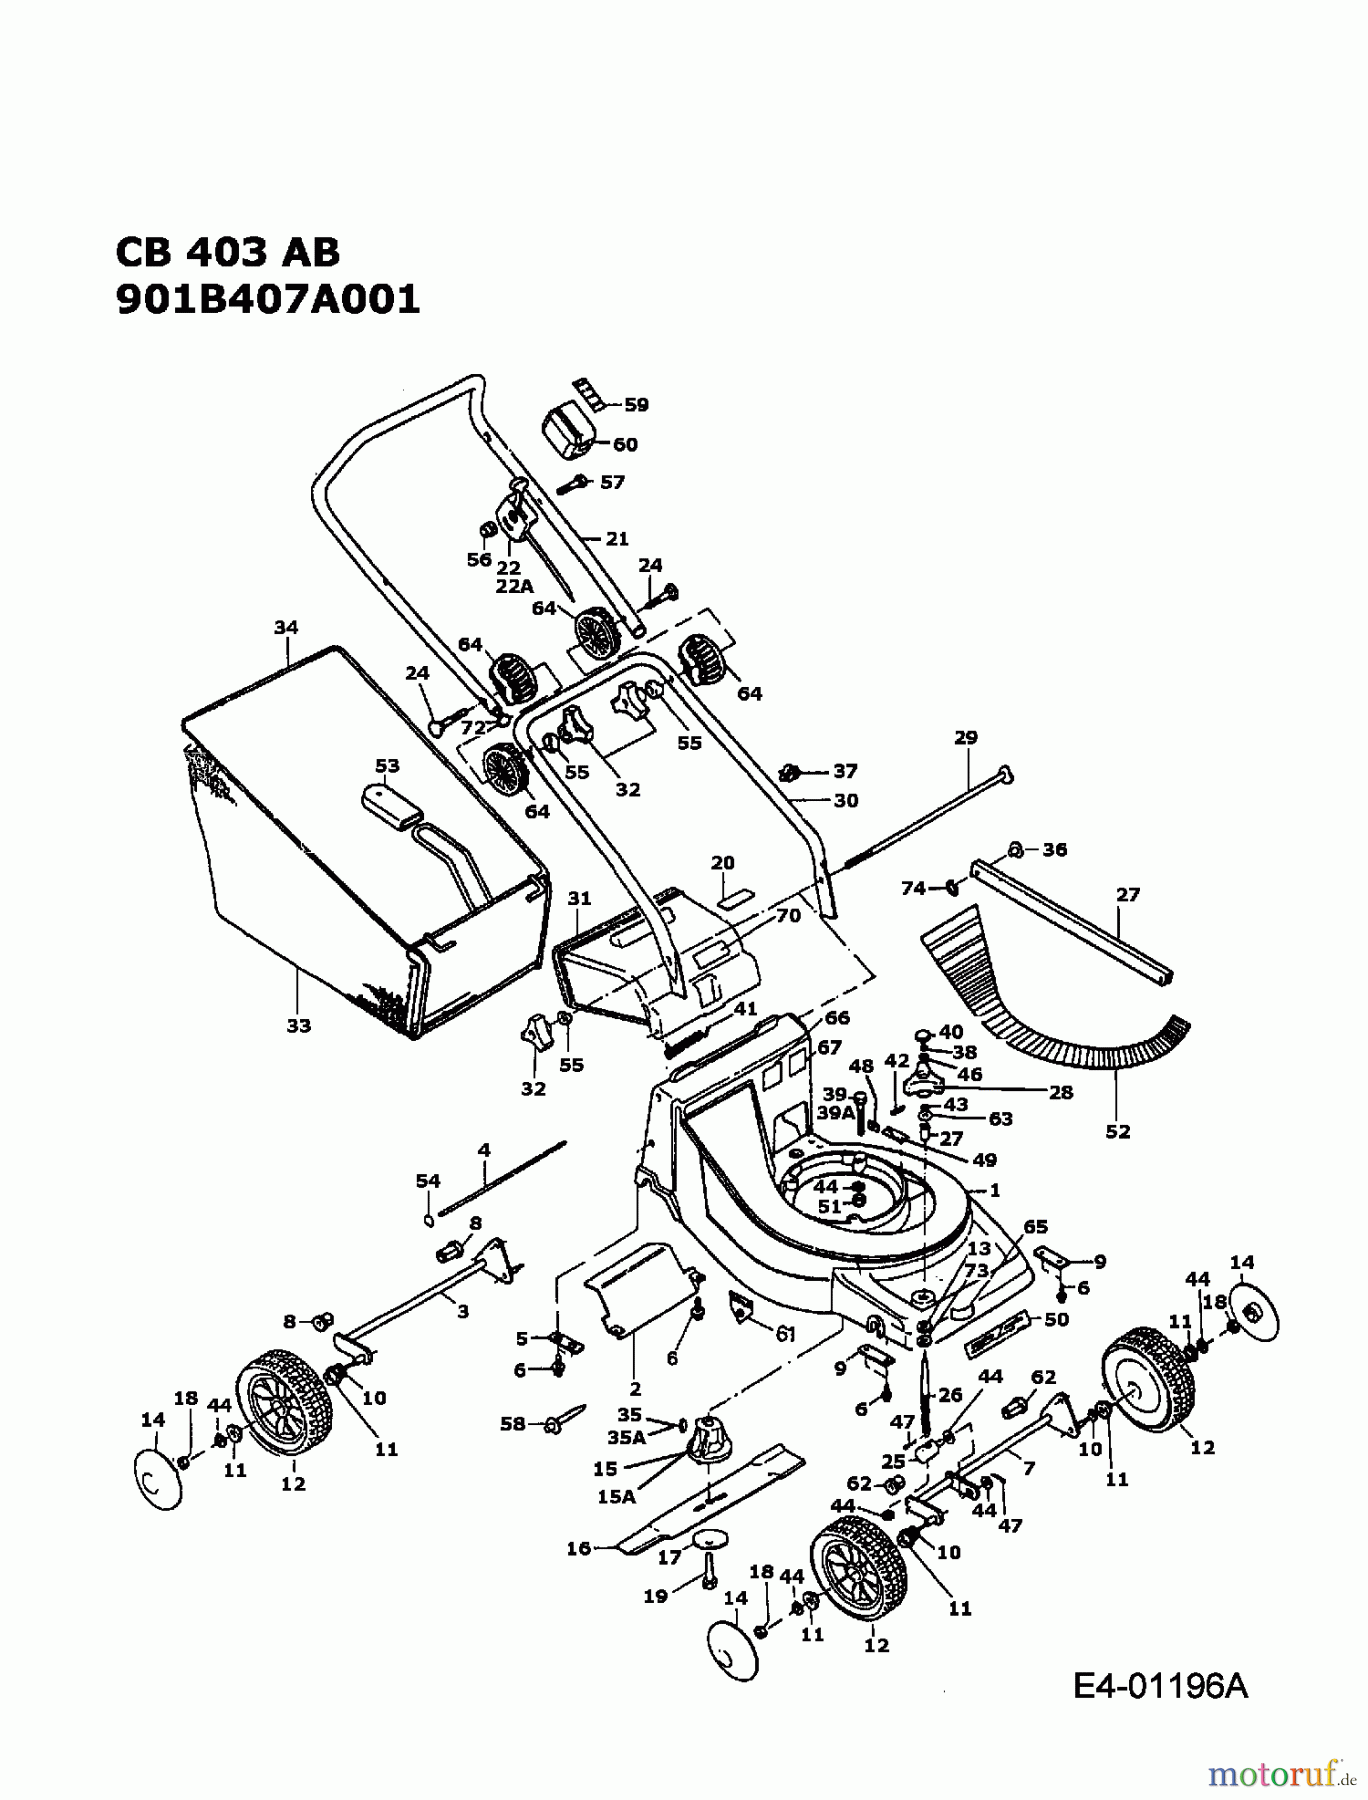  MTD Petrol mower CB 404 SB 901B407A001  (1995) Basic machine